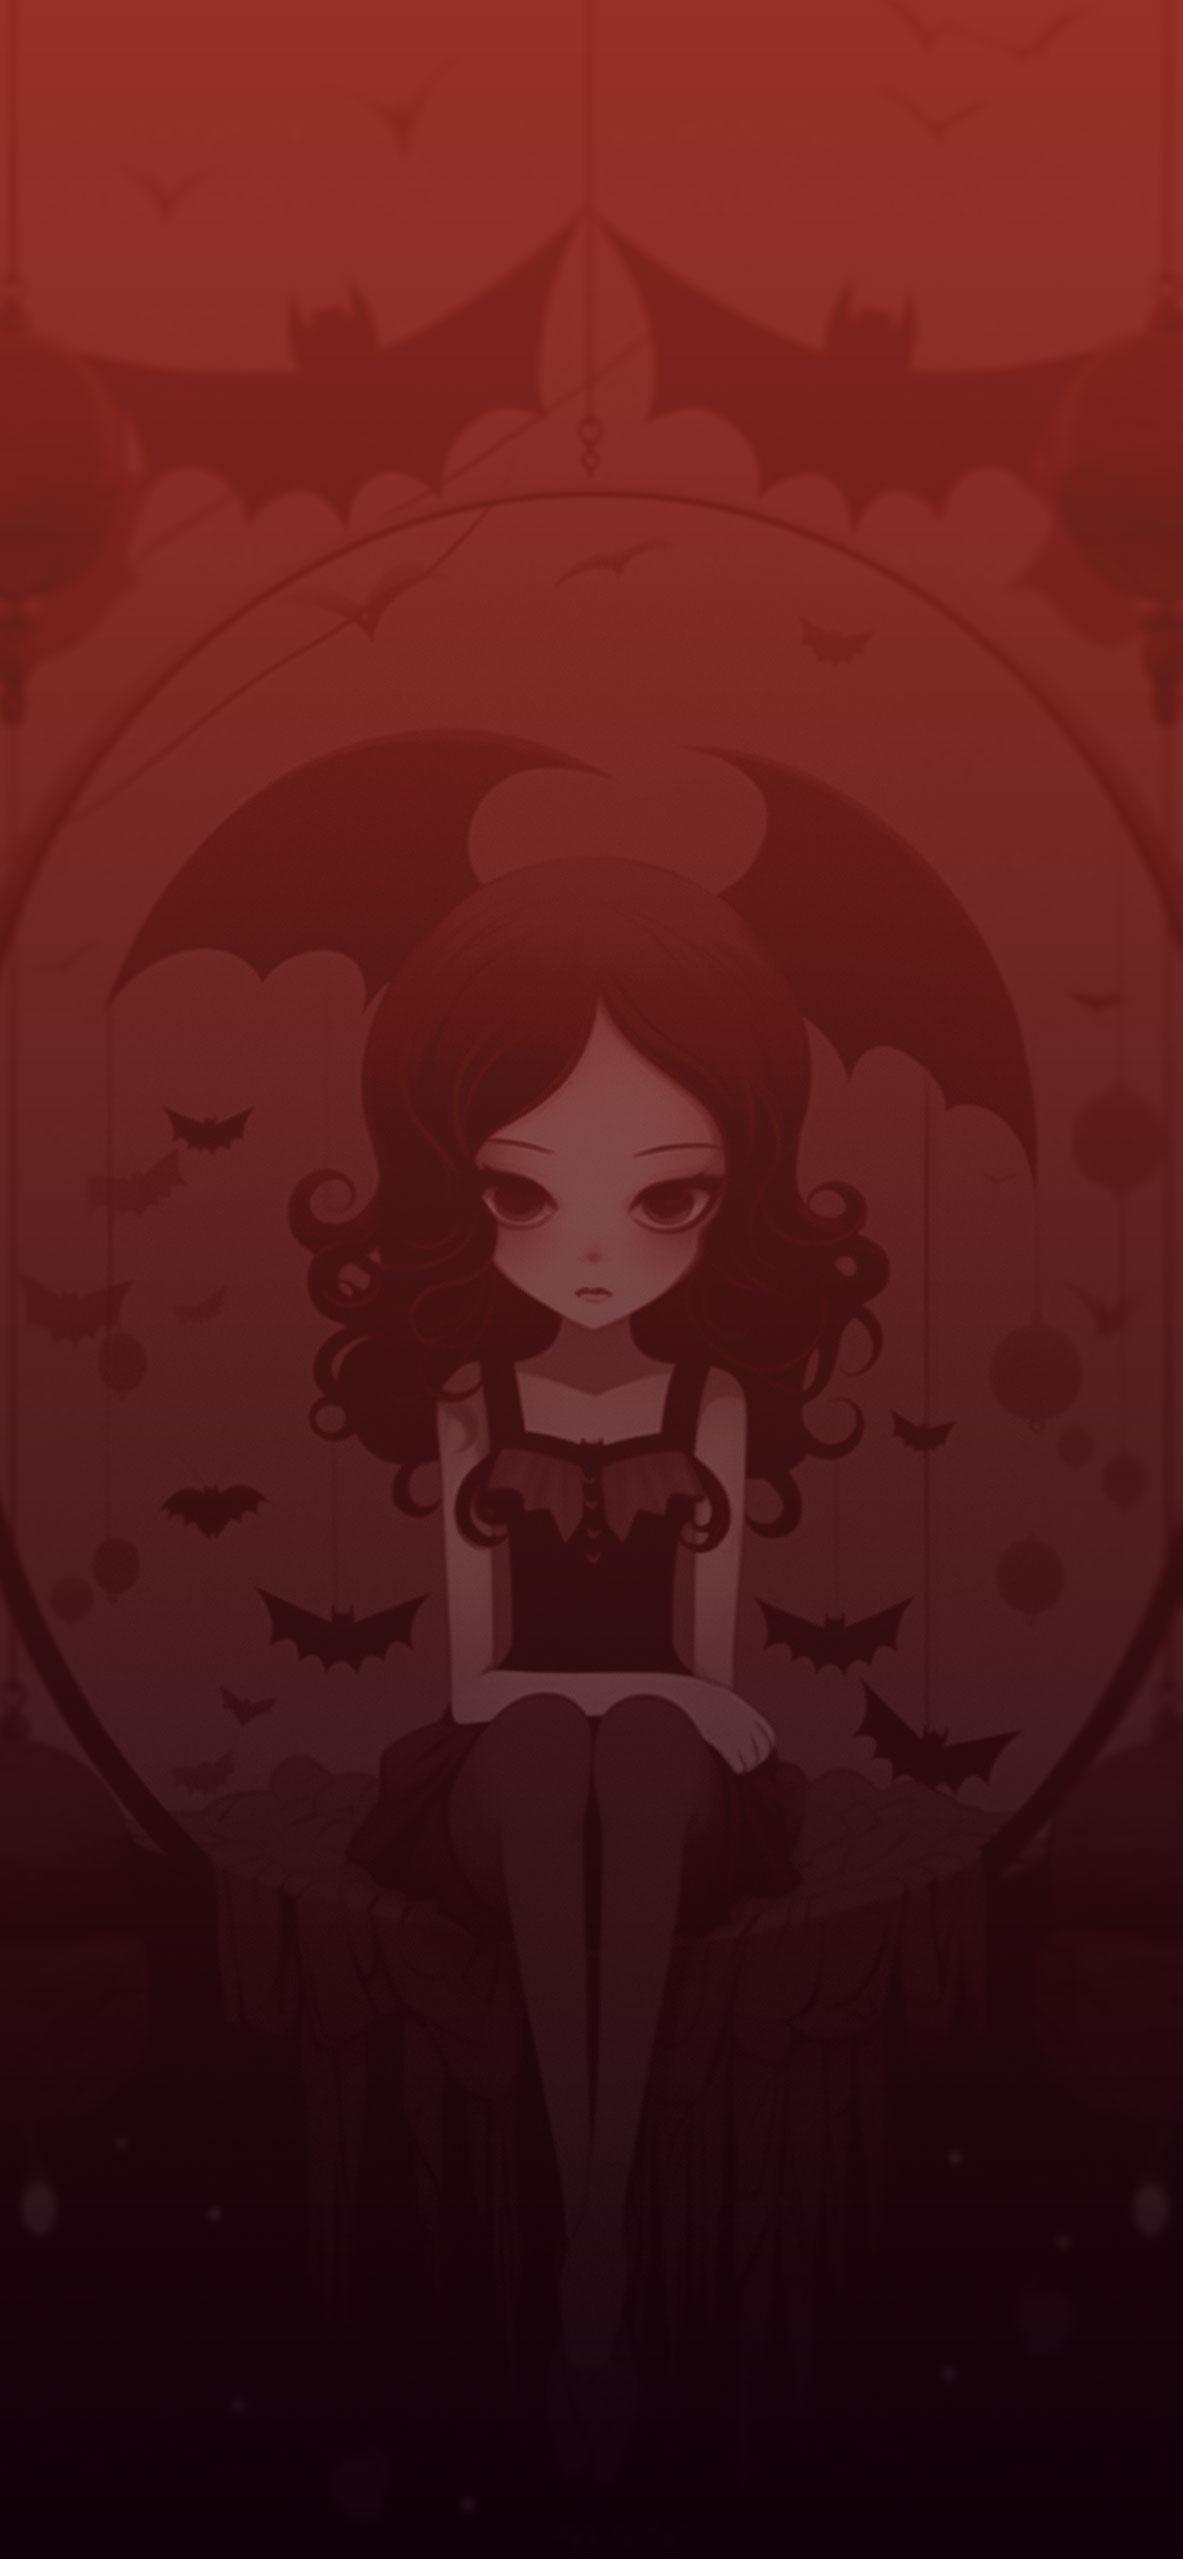 Cute Vampire Cartoon Wallpapers - Best HD Vampire Wallpapers